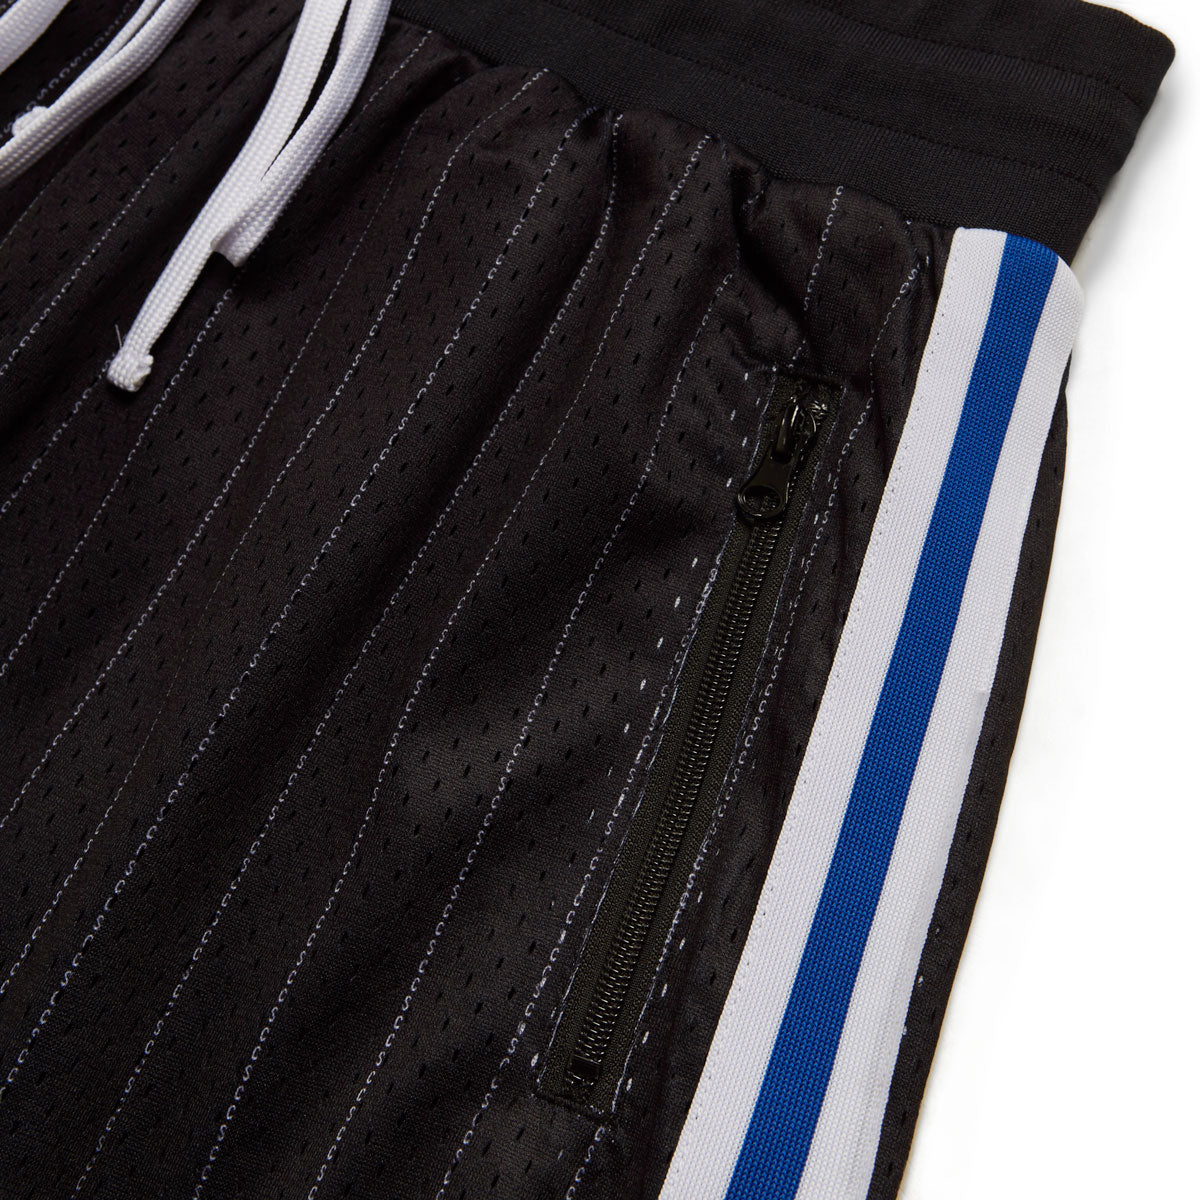 CCS Crossover Basketball Shorts - Black/Blue image 3